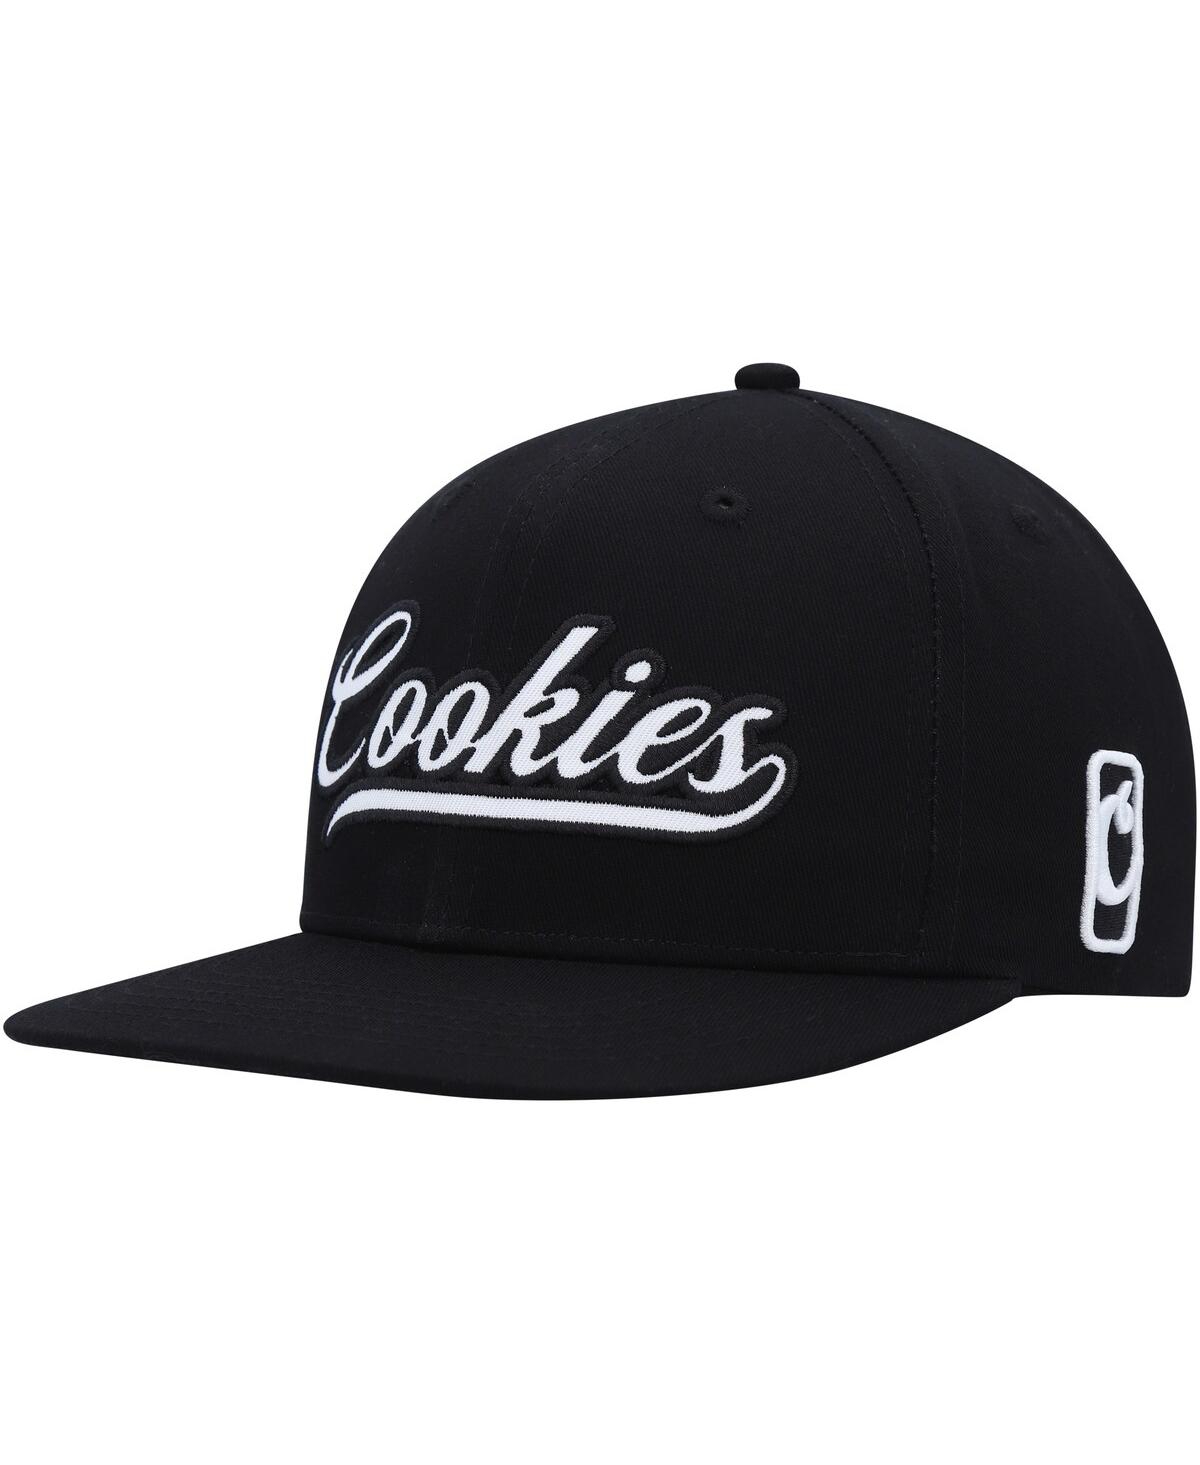 Shop Cookies Men's  Black Pack Talk Snapback Hat